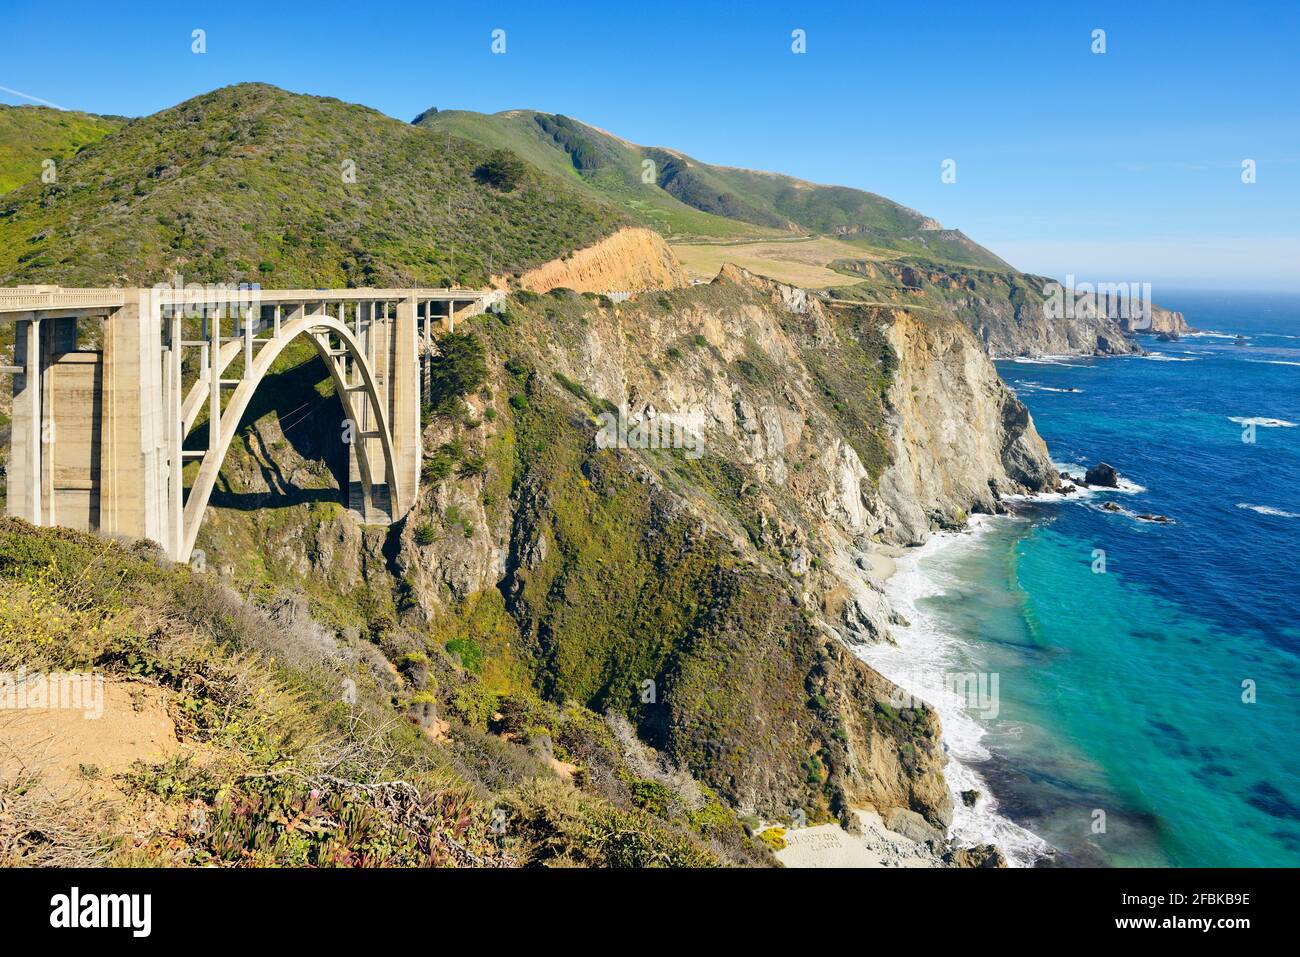 USA, California, Monterey, Bixby Creek Bridge on Cabrillo Highway Stock Photo